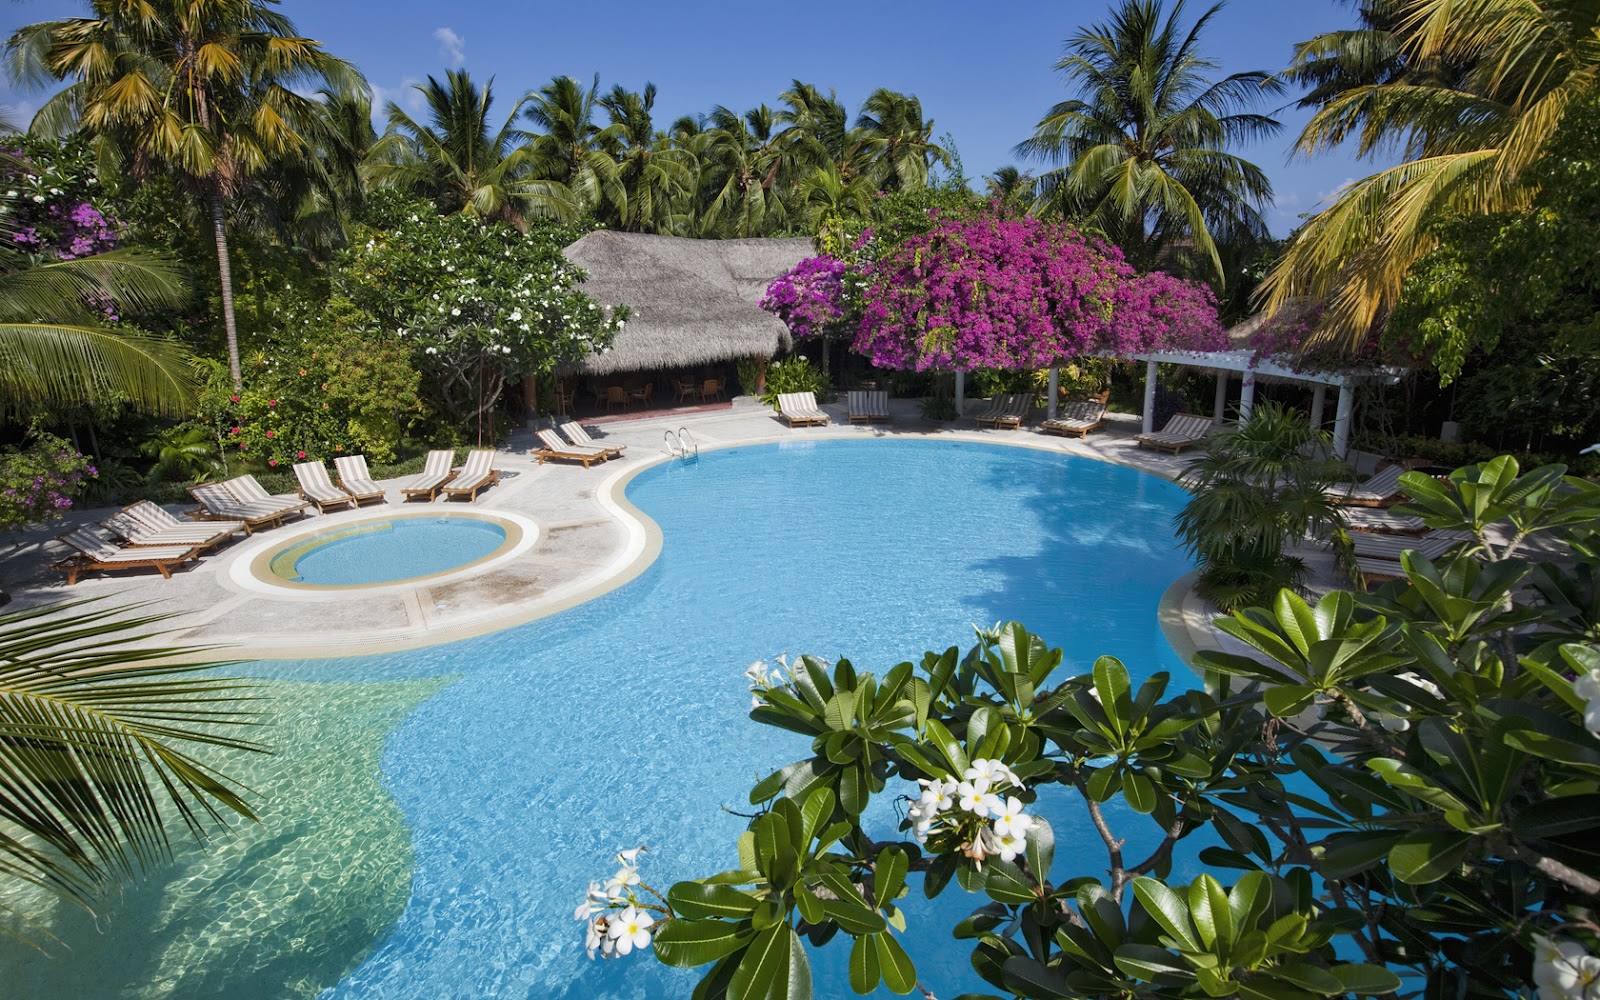 http://2.bp.blogspot.com/-7cv1MUDUP44/UFnJb9zUwWI/AAAAAAAAEmg/C0S1dxNoE2Q/s1600/Maldives-Beautiful-Hotel-Pool-Palms-and-Bungalows-HD-Landscape-Wallpaper--NatureWallBase.Blogspot.Com-.jpg